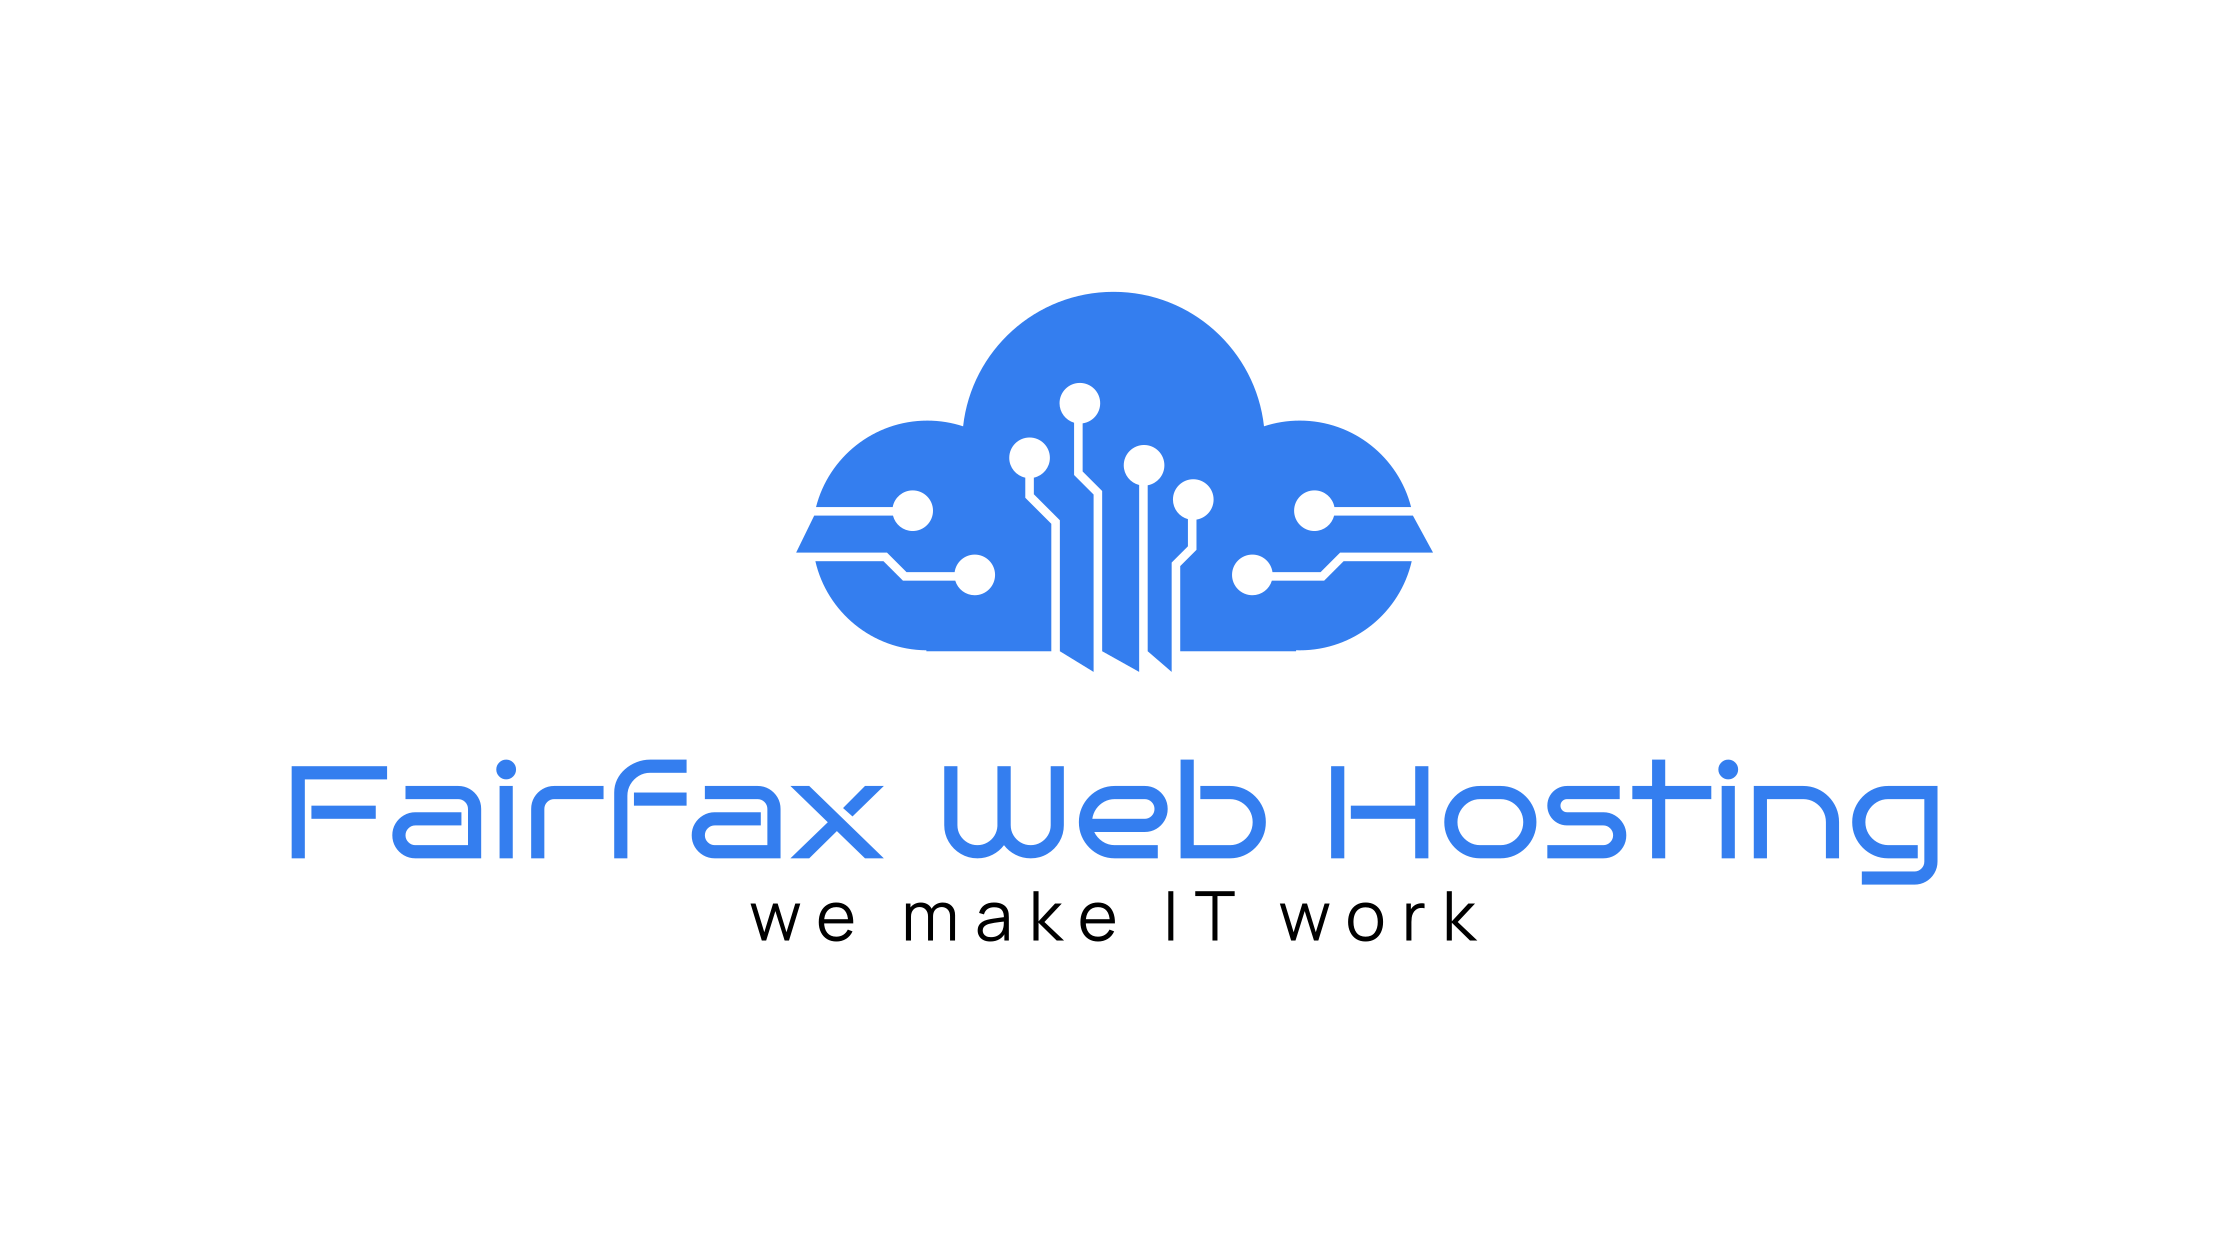 Fairfax Web Hosting